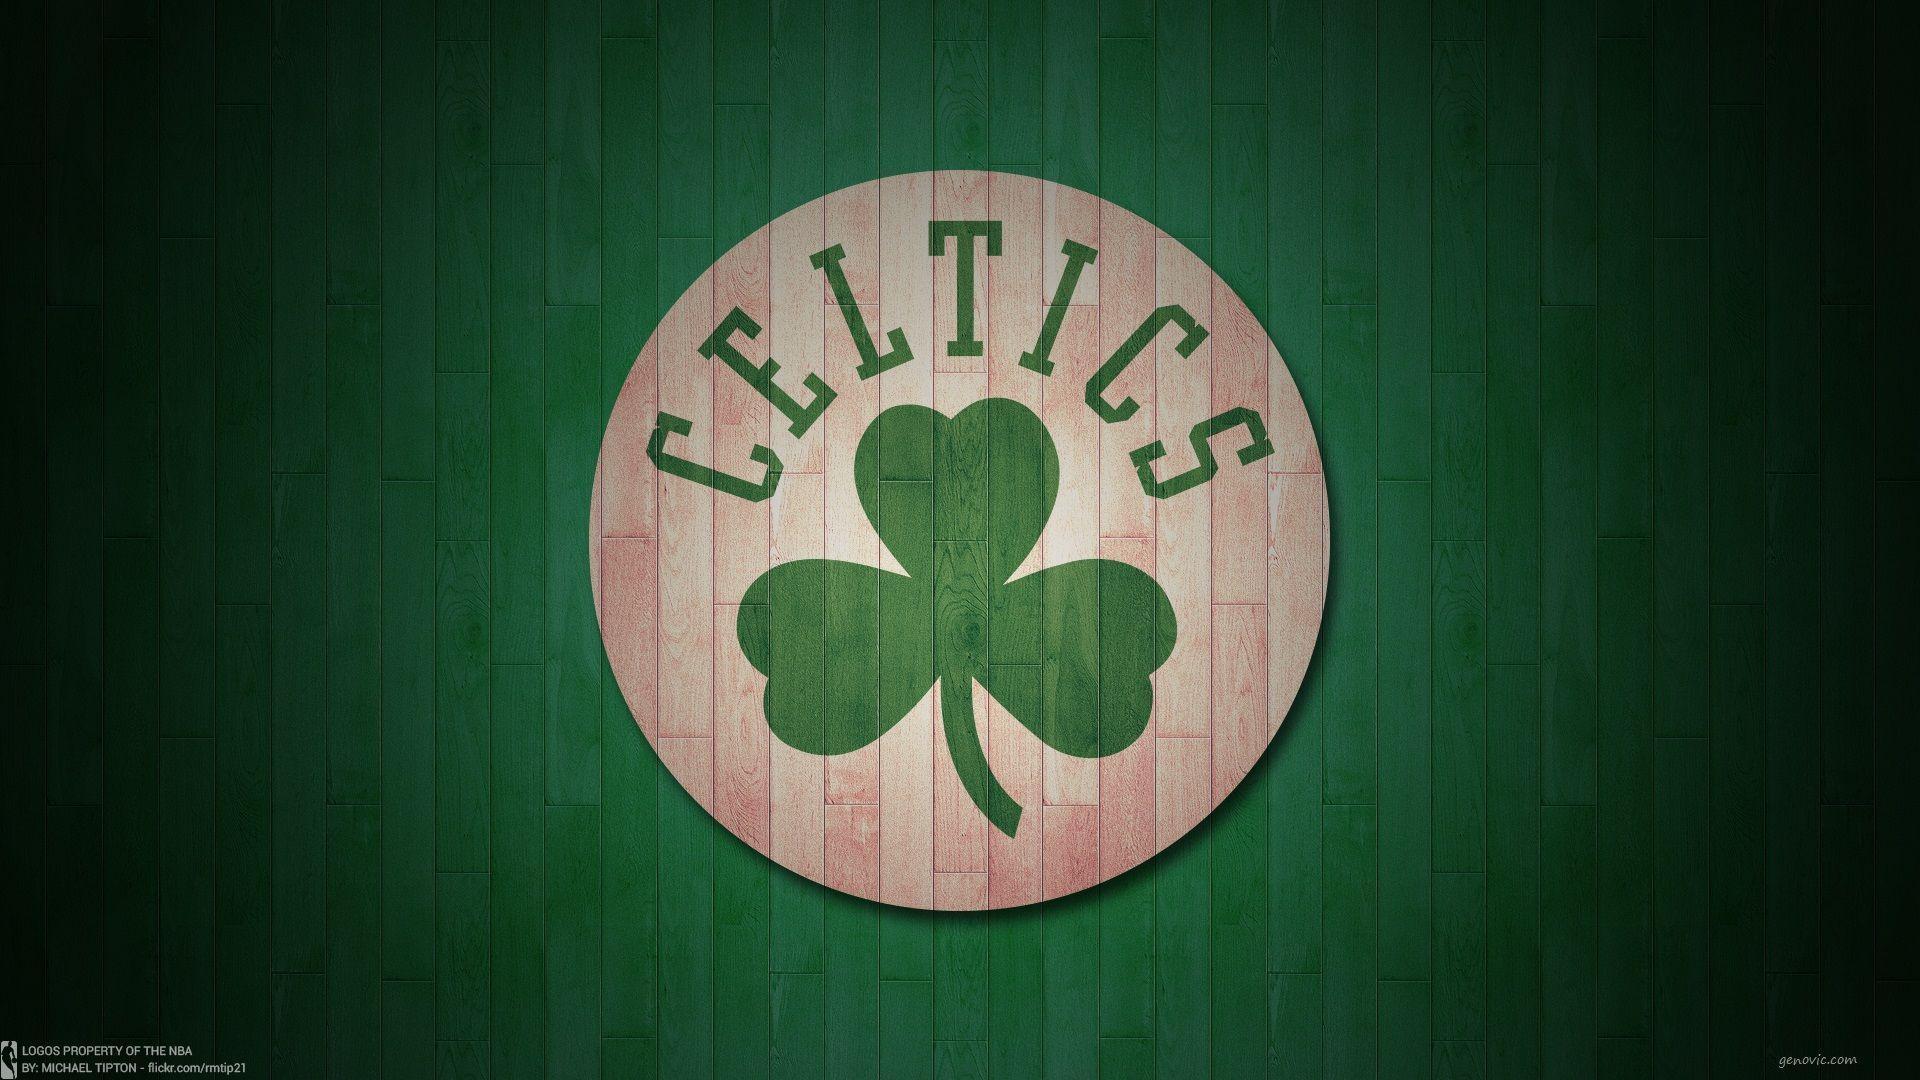 Boston Celtics Wallpaper HD 2015. Genovic